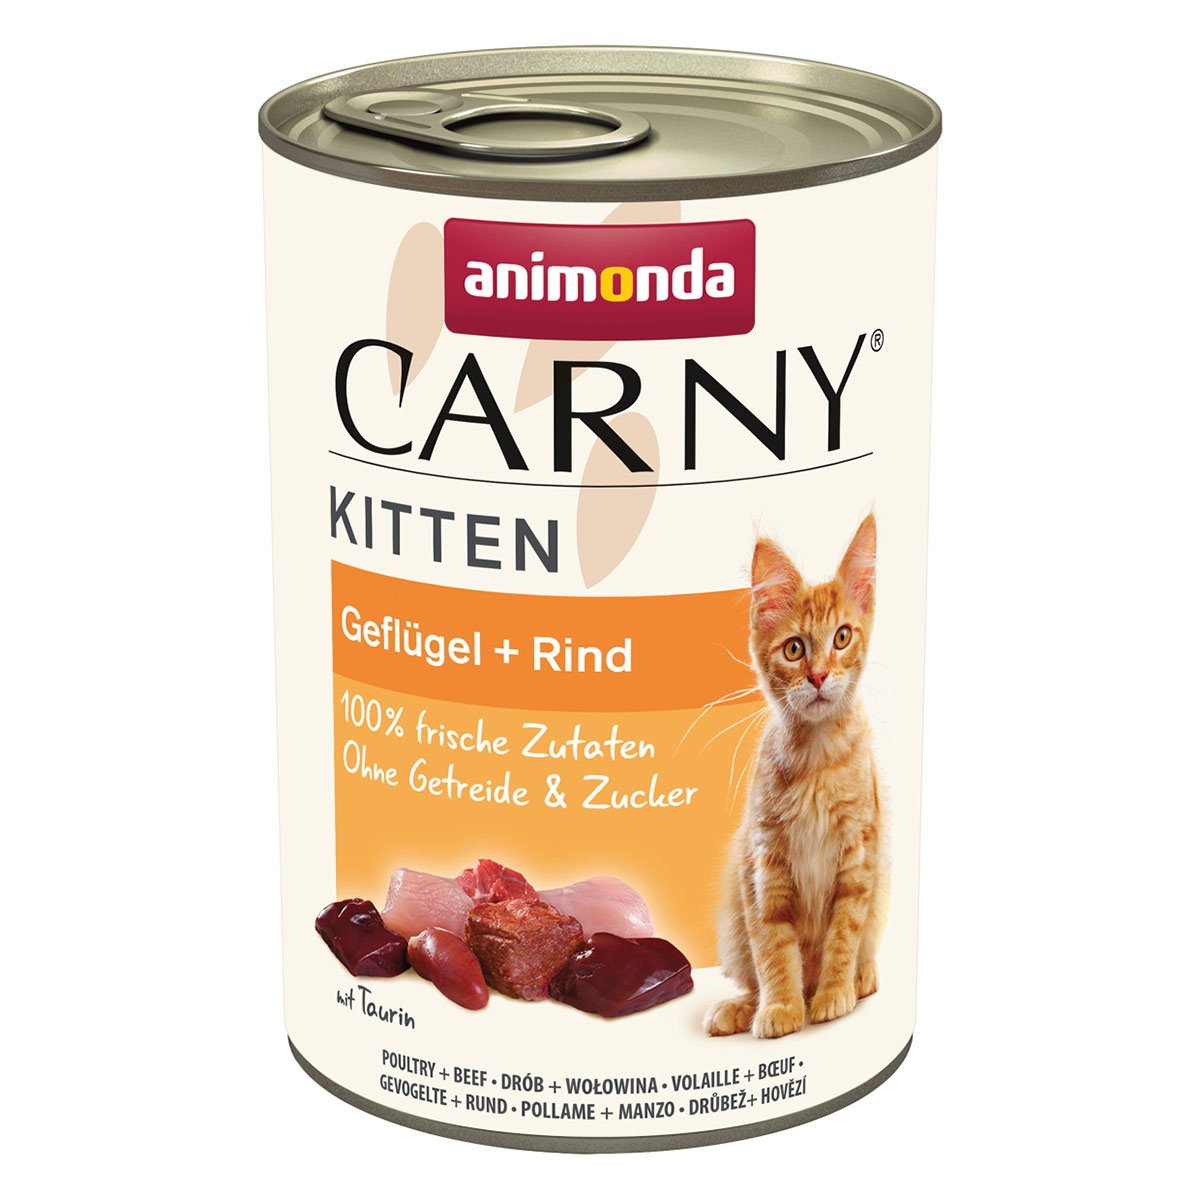 animonda Carny Kitten Gefügel + Rind 12x400g von animonda Carny